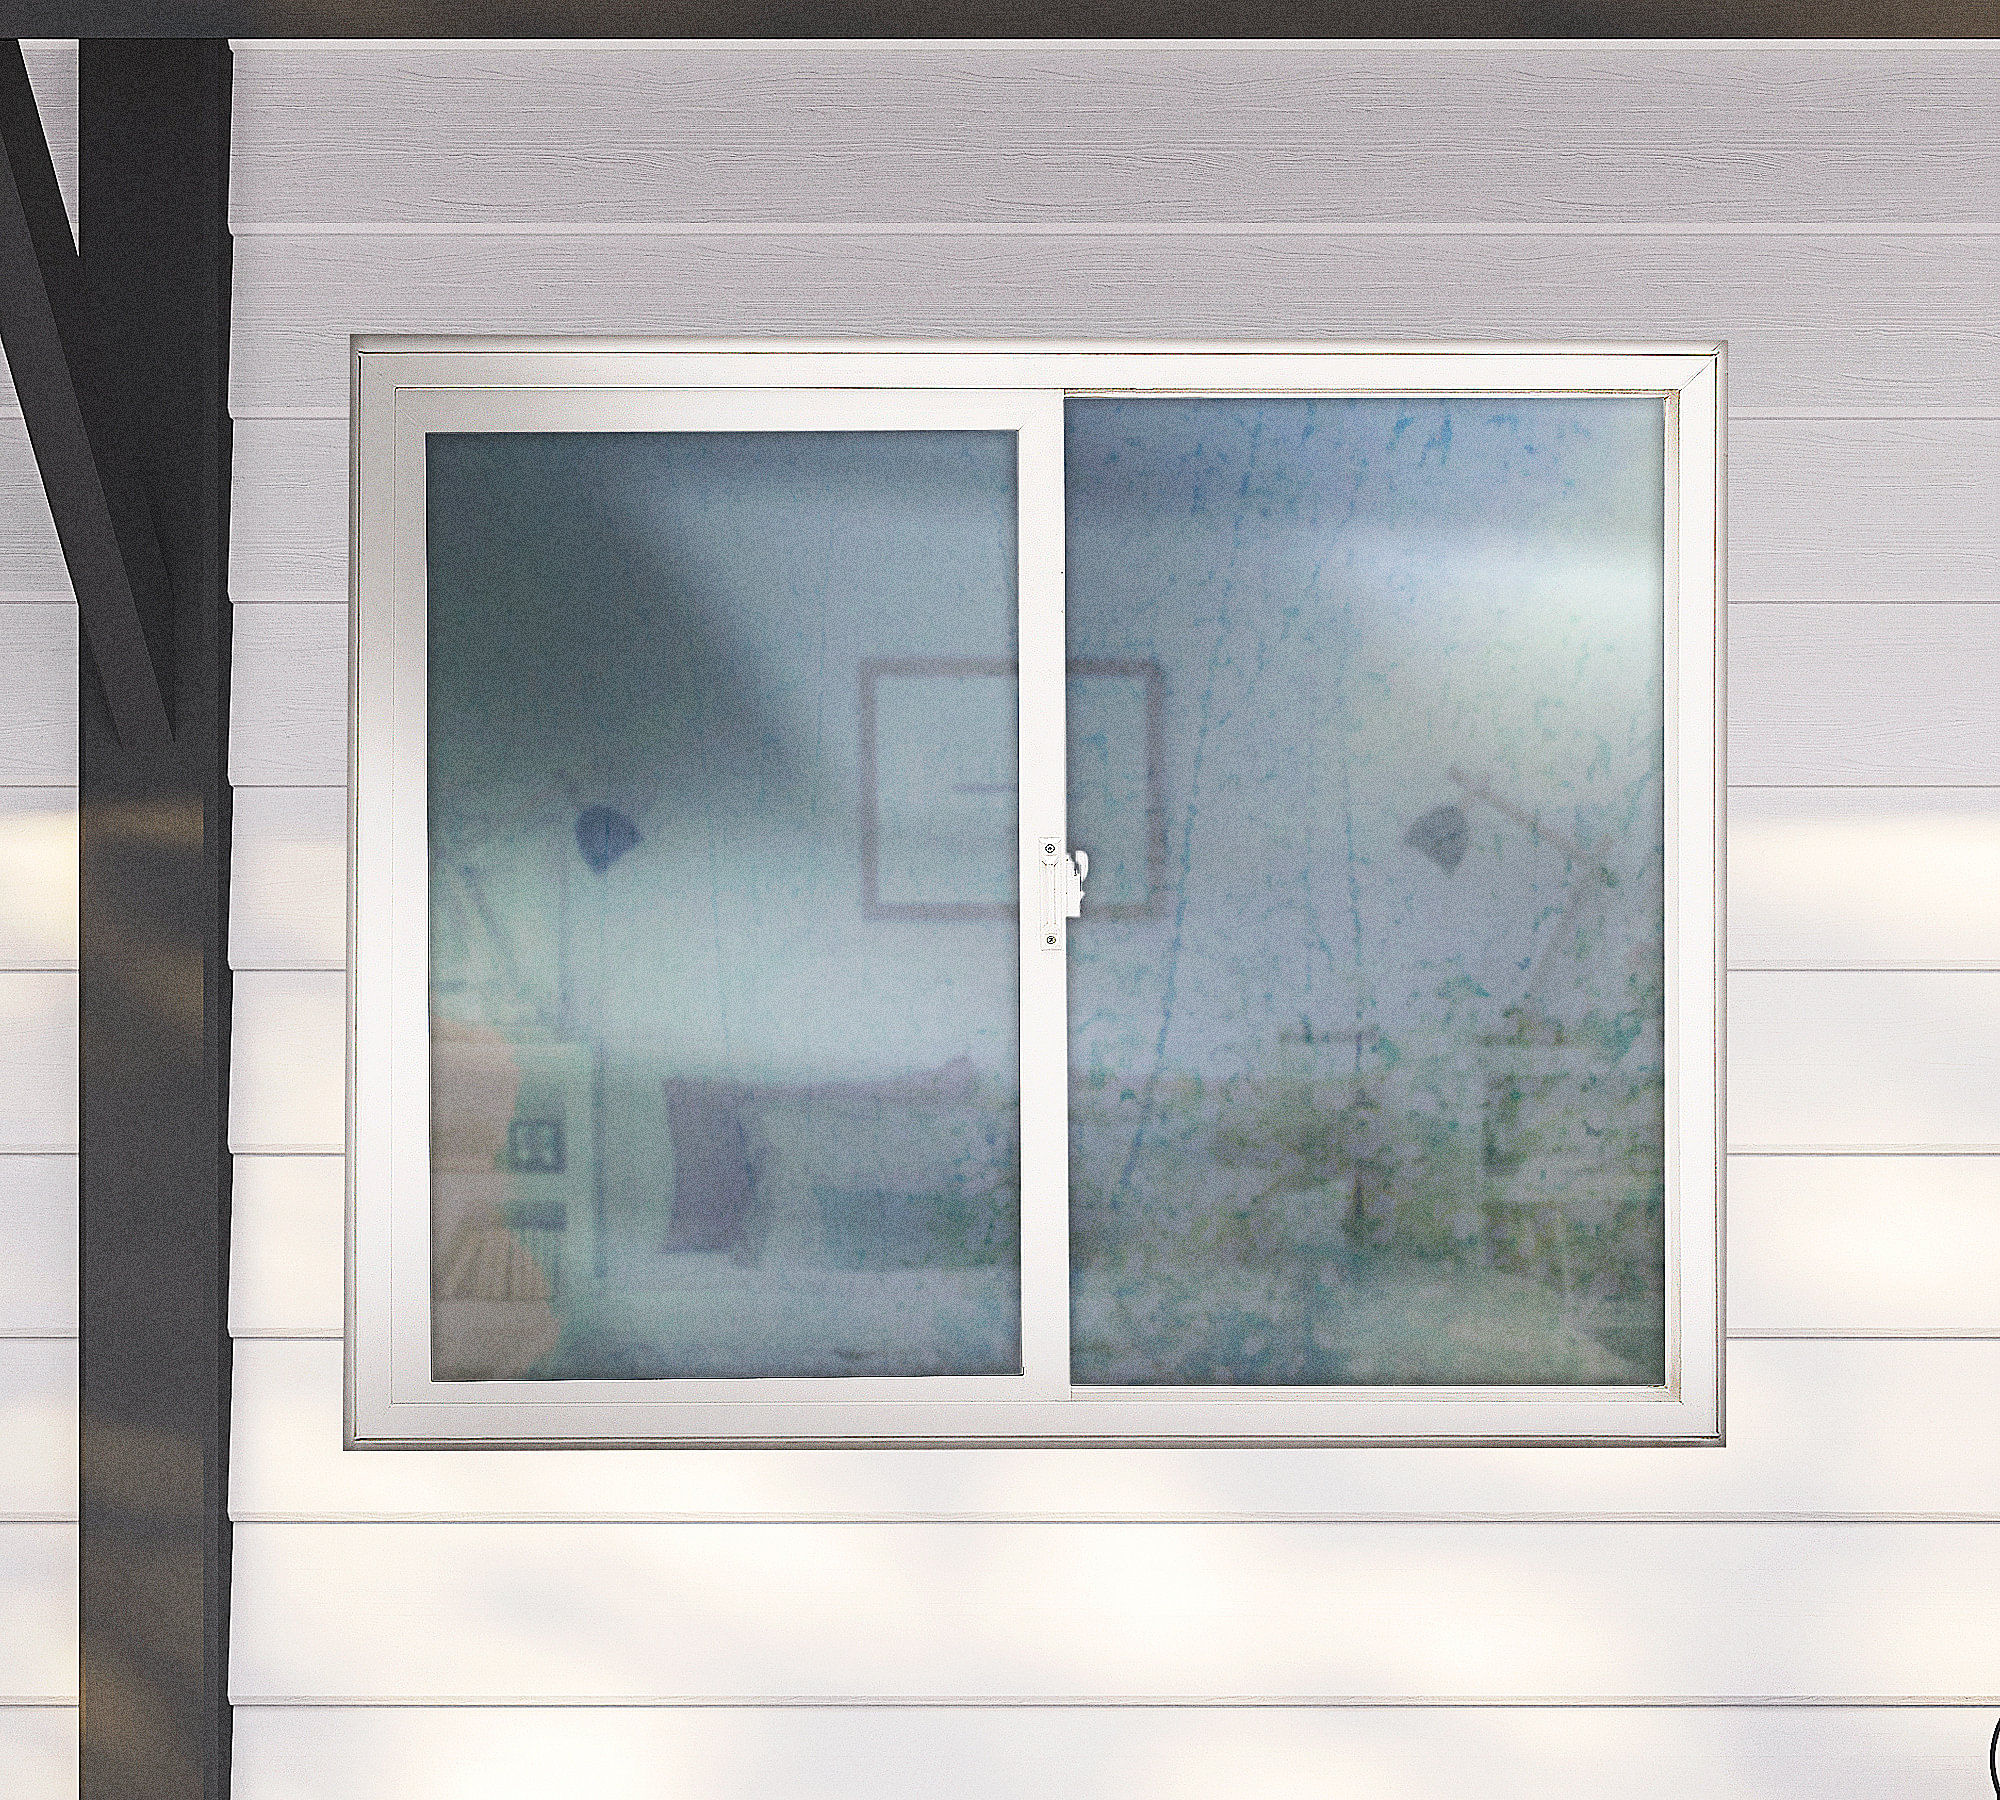 Puerta Plegable PVC 120x200 cm blanca con ventana Baldara